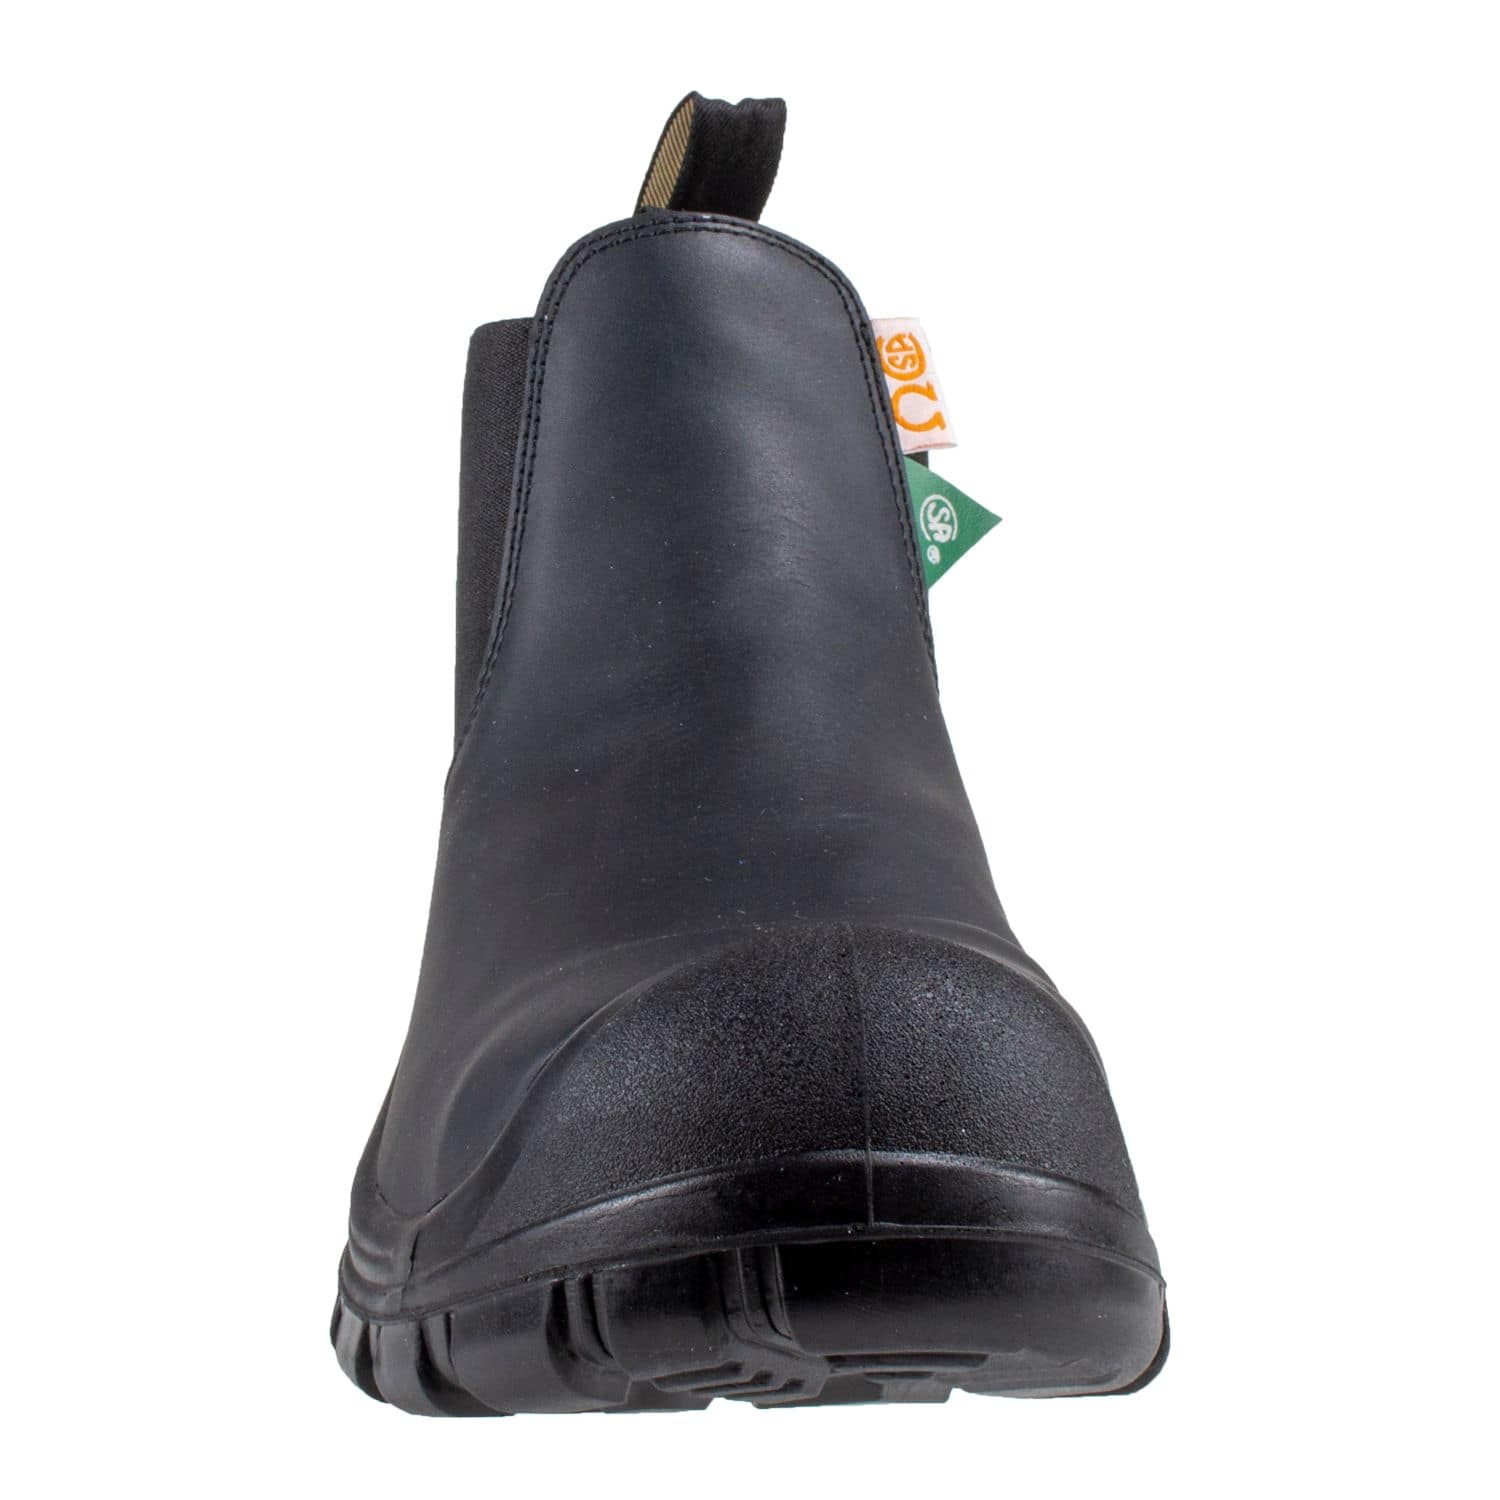 Altra Galvan Men's CSA Chelsea Steel Toe Leather Work Boots, Electric Shock  Resistant, Black